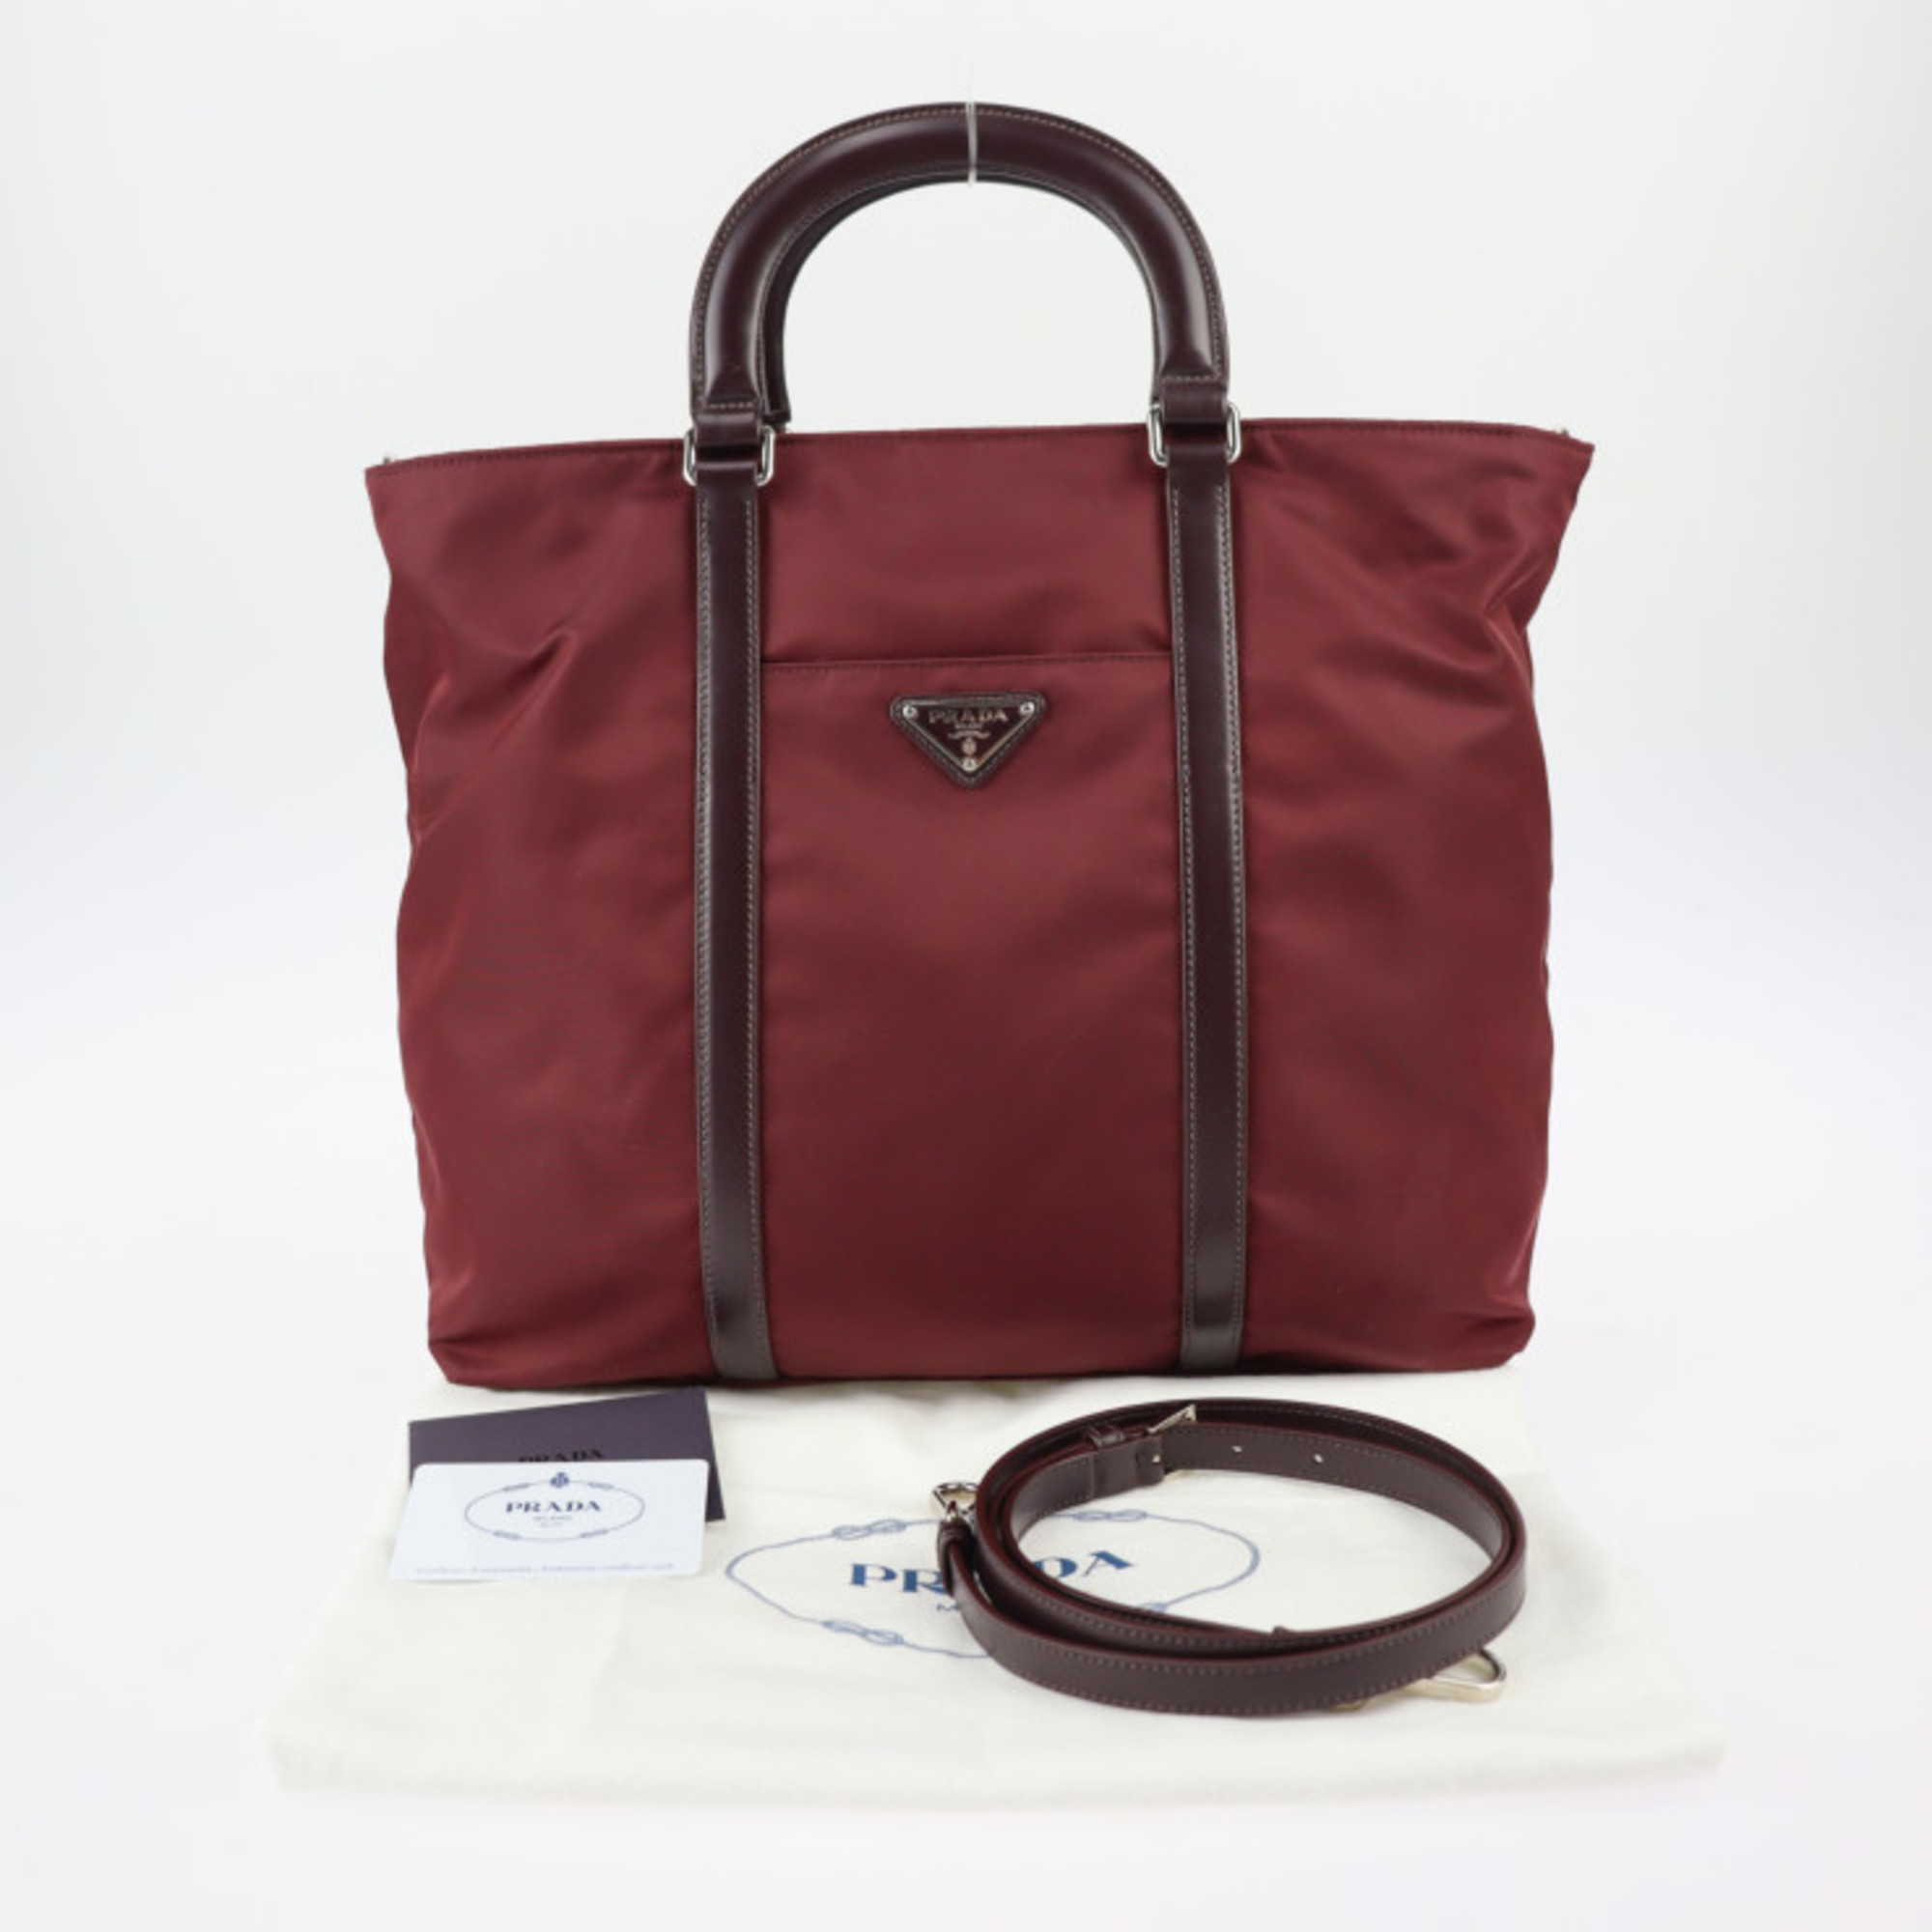 PRADA Prada Tote Bag 1BG057 Nylon Leather GRANATO Garnet Bordeaux 2WAY Shoulder Triangle Logo